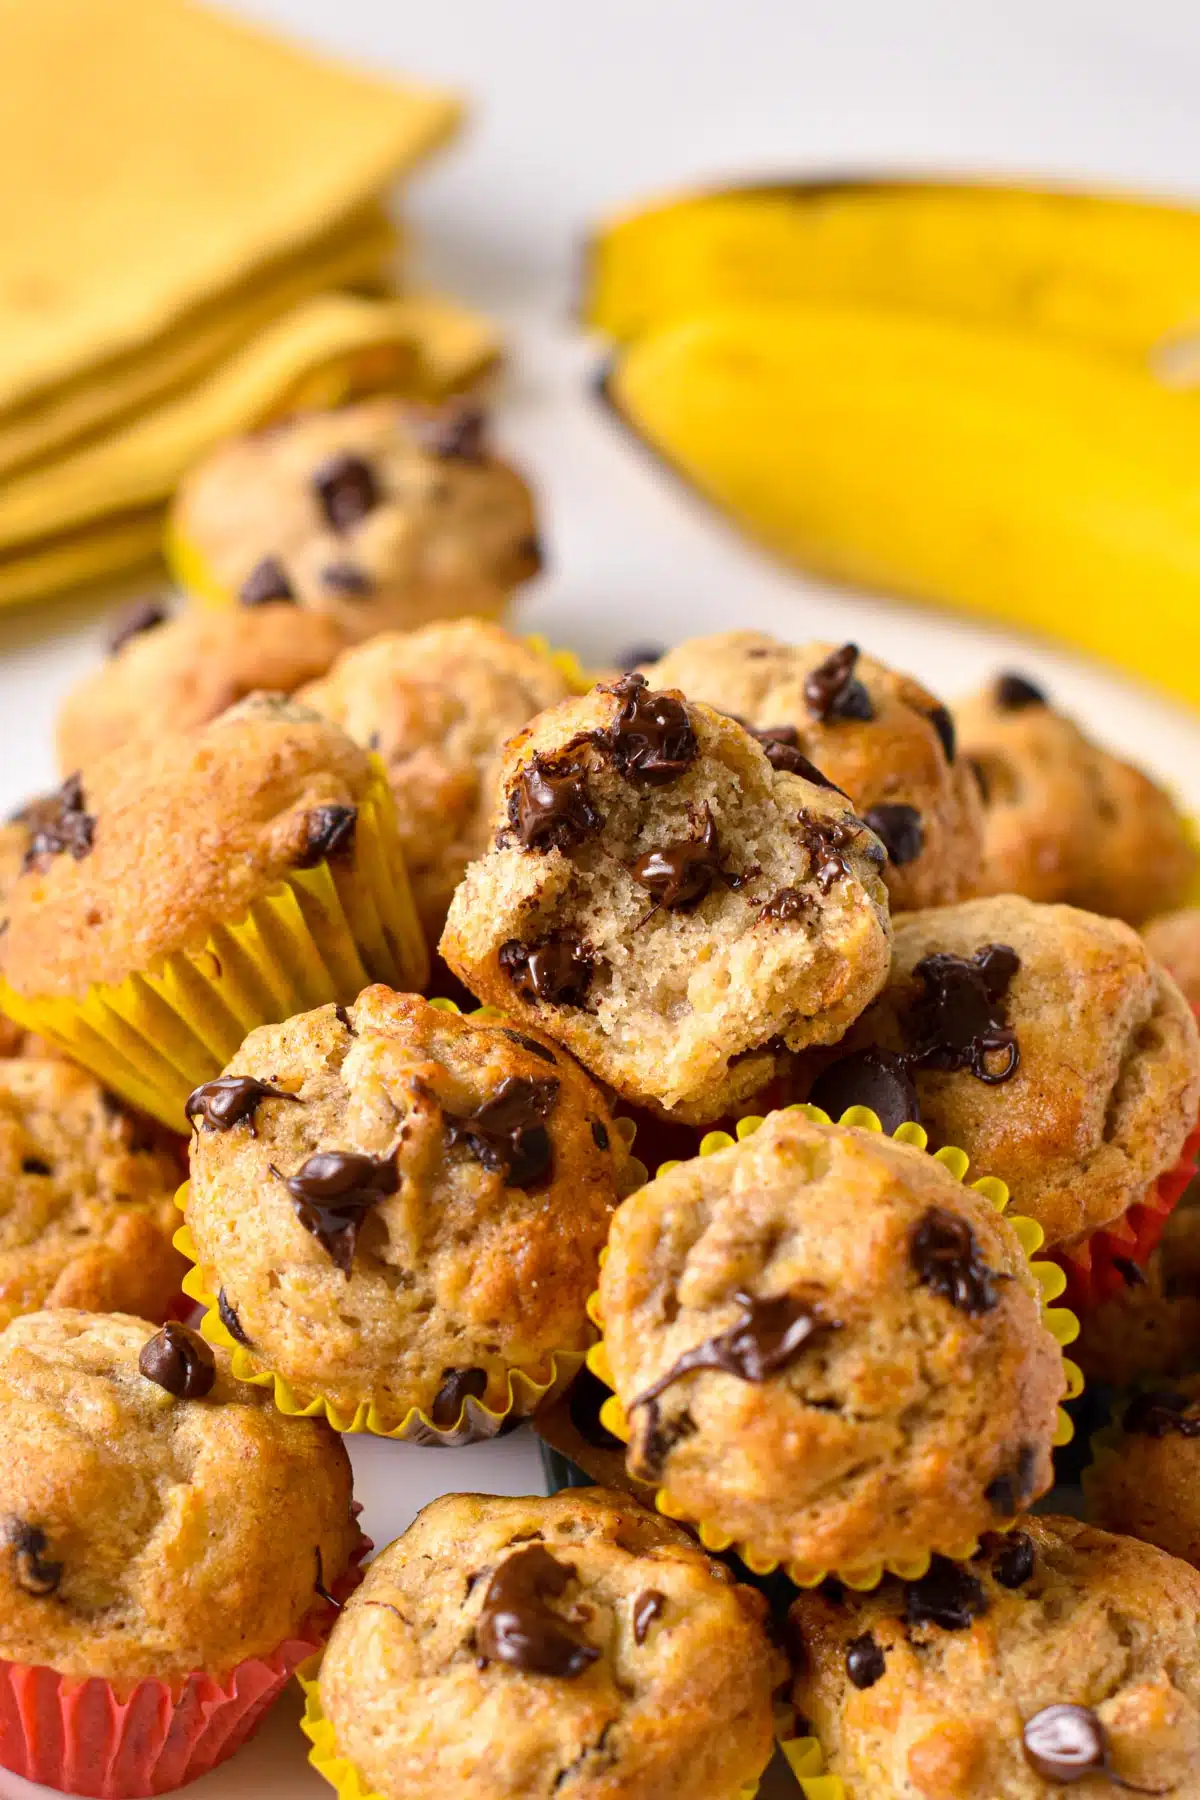 https://www.busylittlekiddies.com/wp-content/uploads/mini-banana-chocolate-chip-muffins-1.jpg.webp